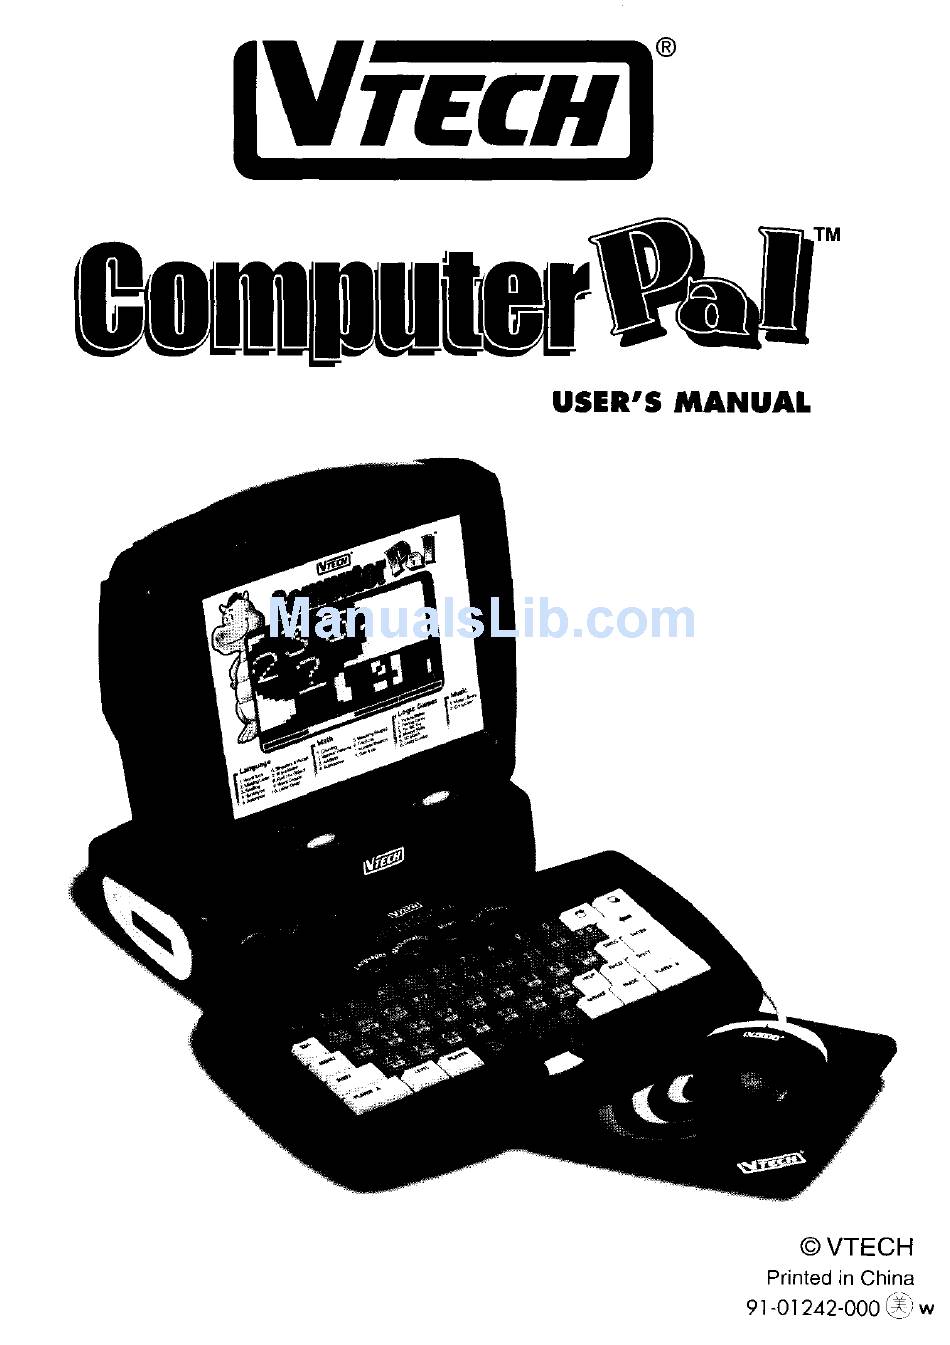 VTECH COMPUTER PAL USER Pdf Download | ManualsLib